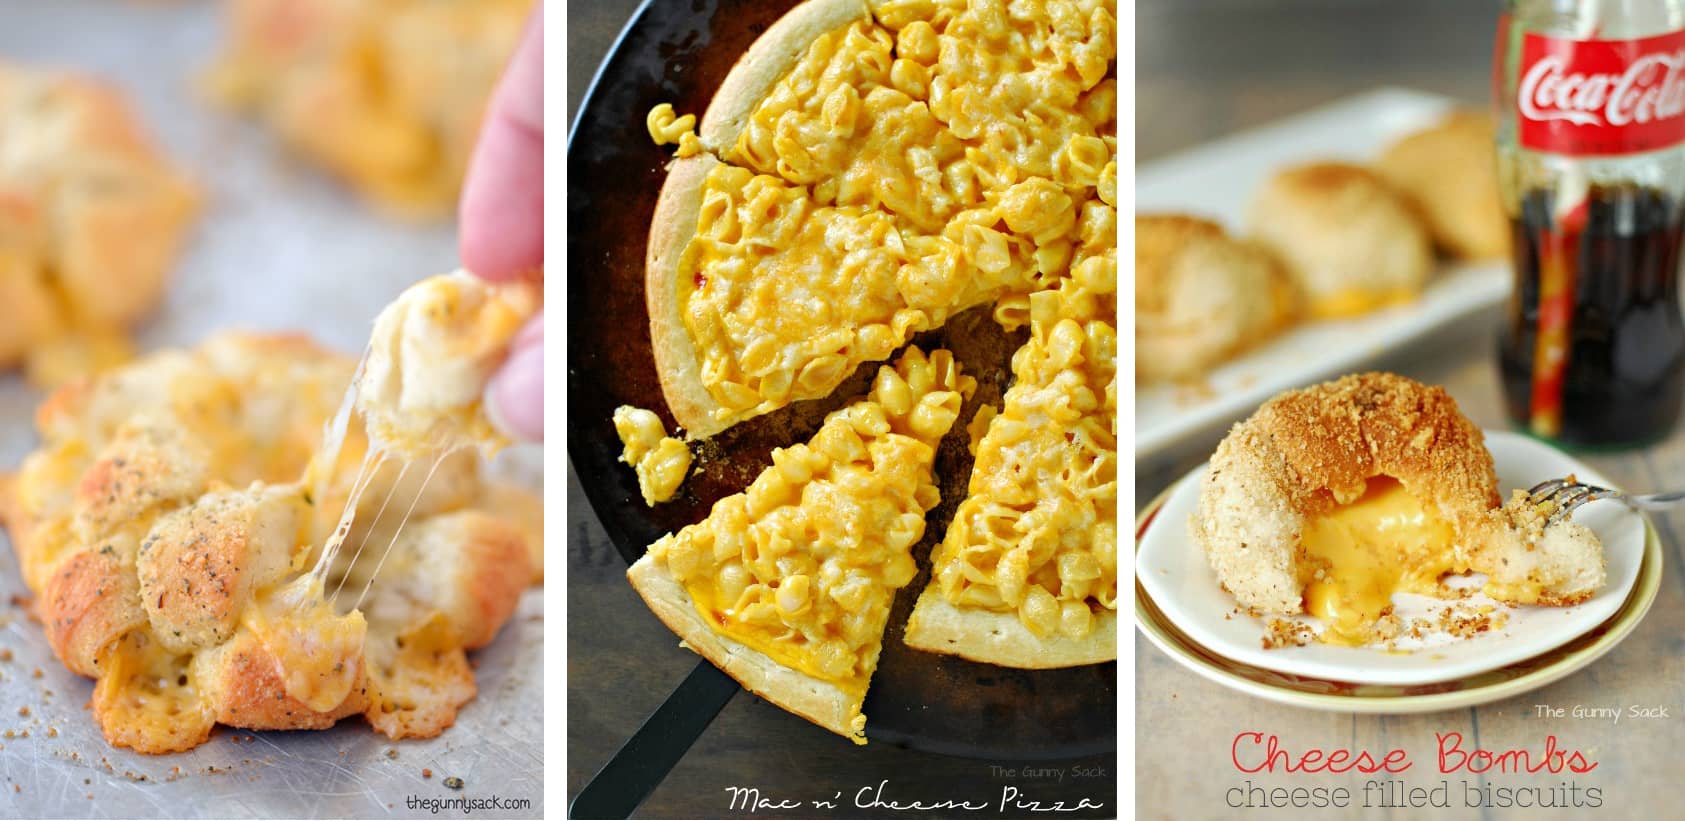 https://www.thegunnysack.com/wp-content/uploads/2015/07/Cheesy_Recipes.jpg